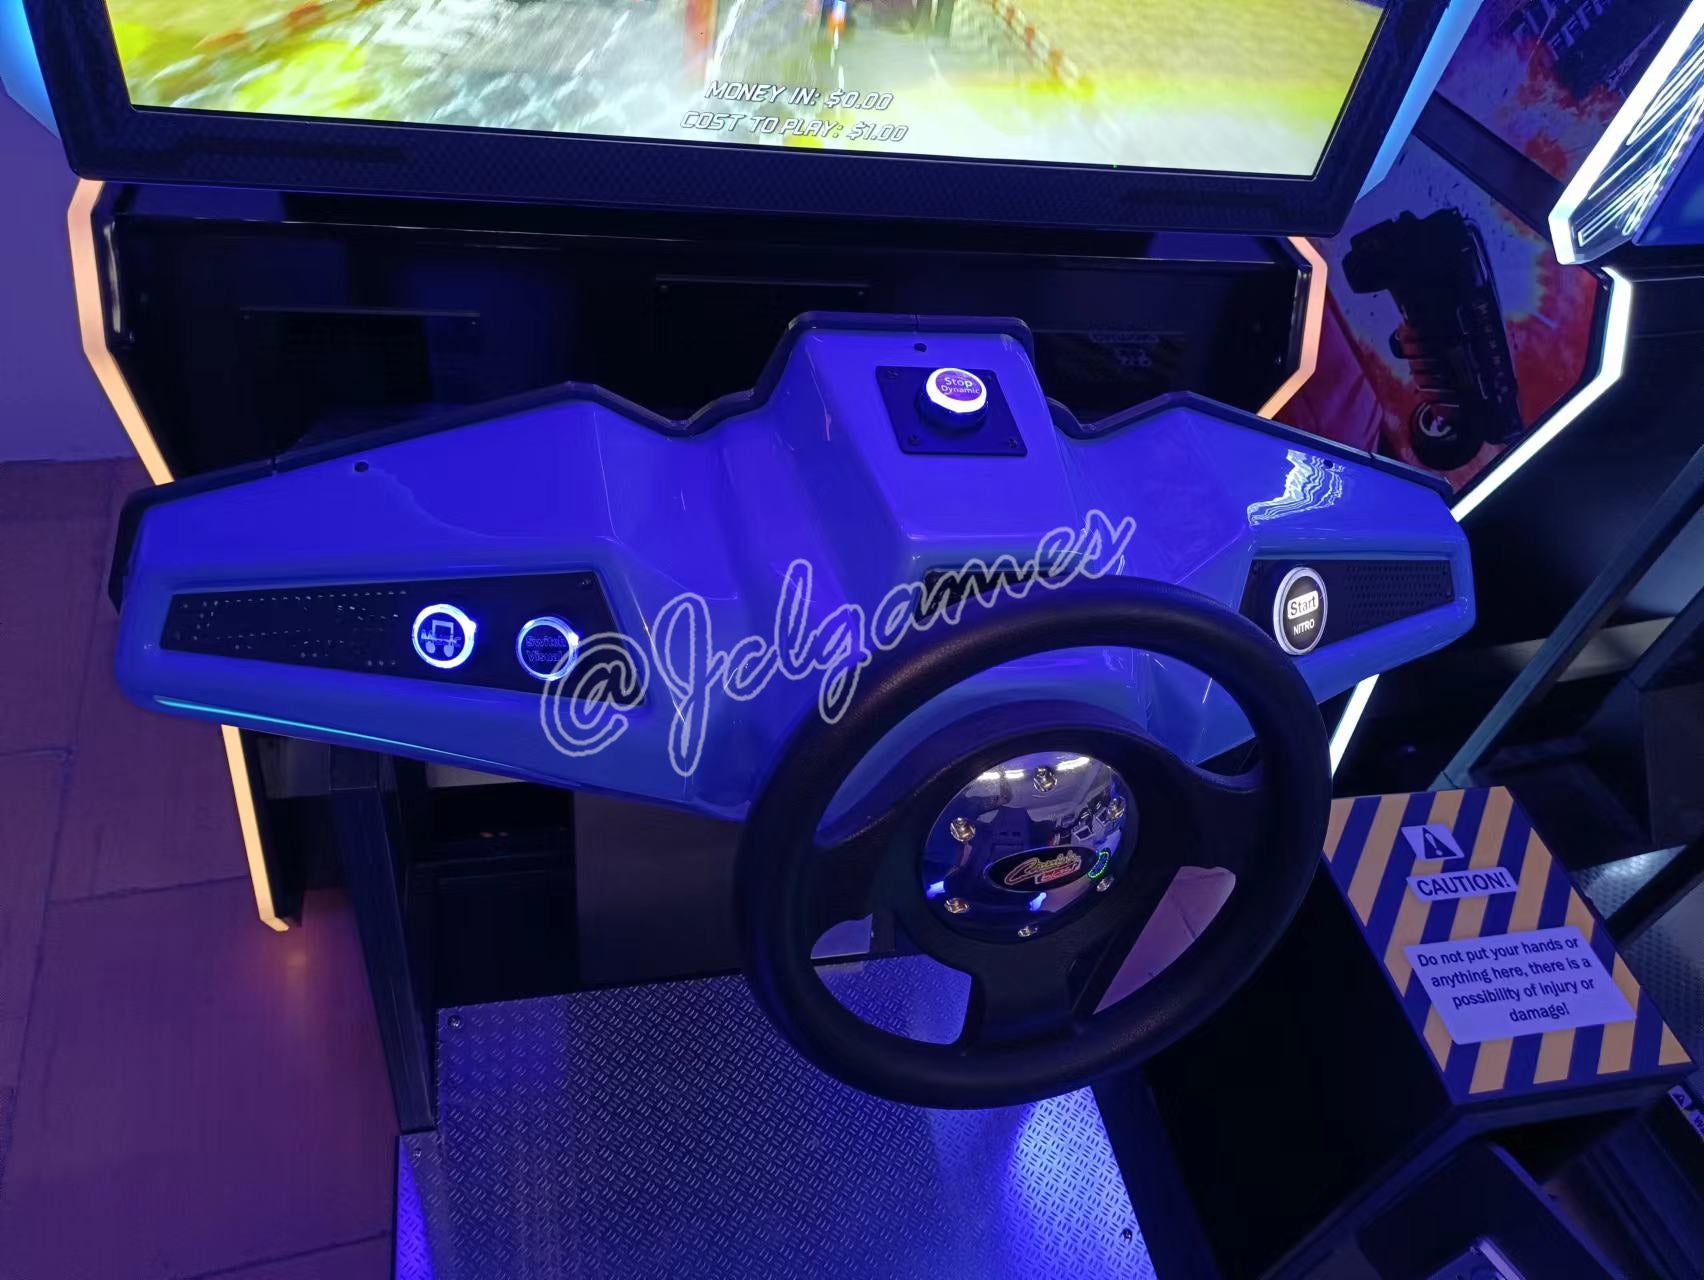 China Brand New Crusi'n Blast Full Motion Racing Arcade Car for